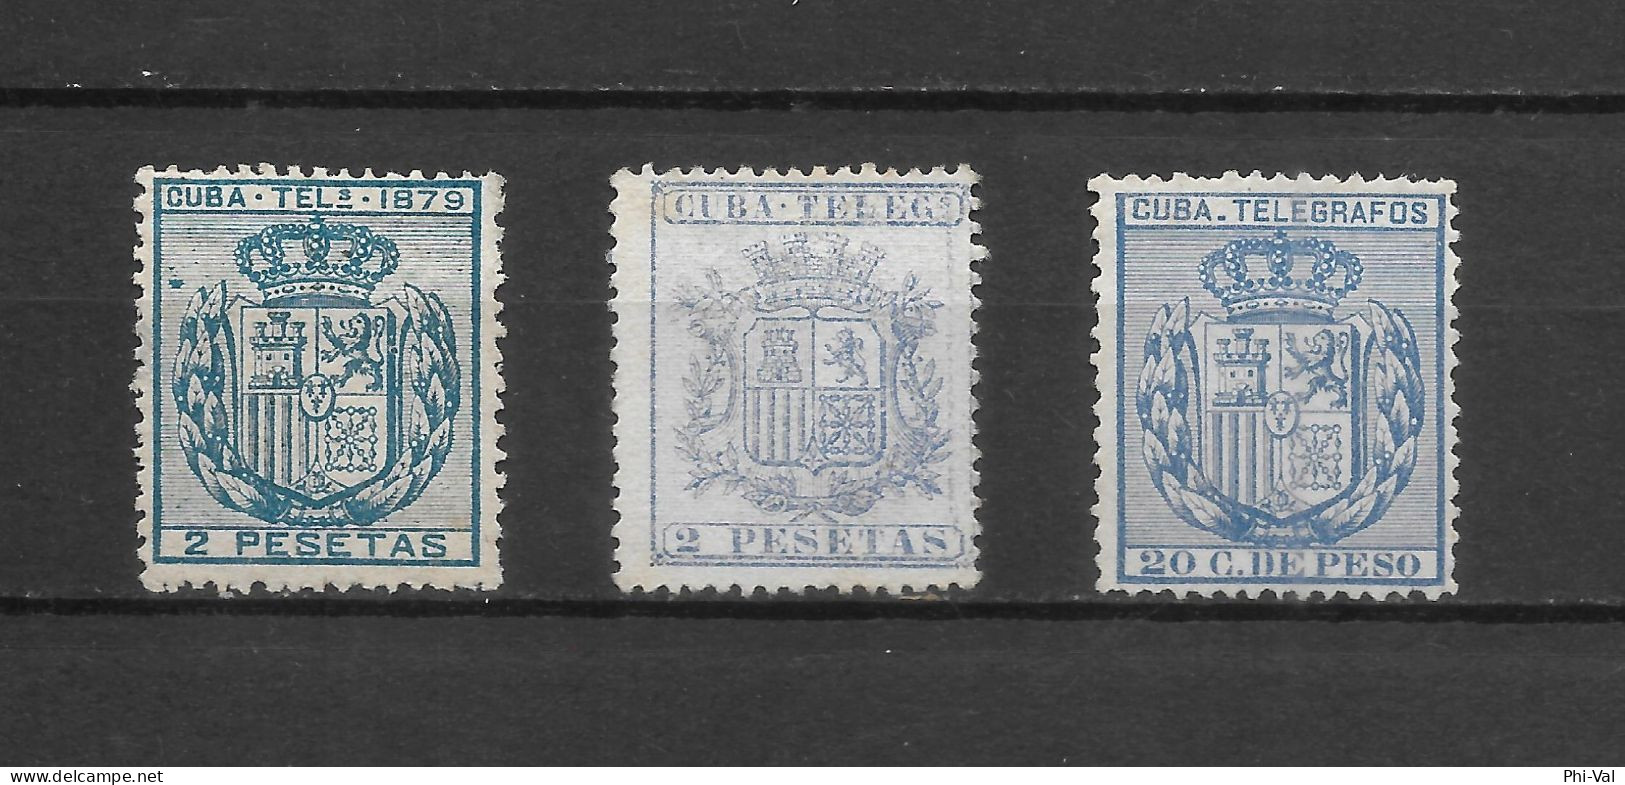 (LOT349) Cuba Telegraph Stamps. 1875-1896. VF MLH - Telegrafo